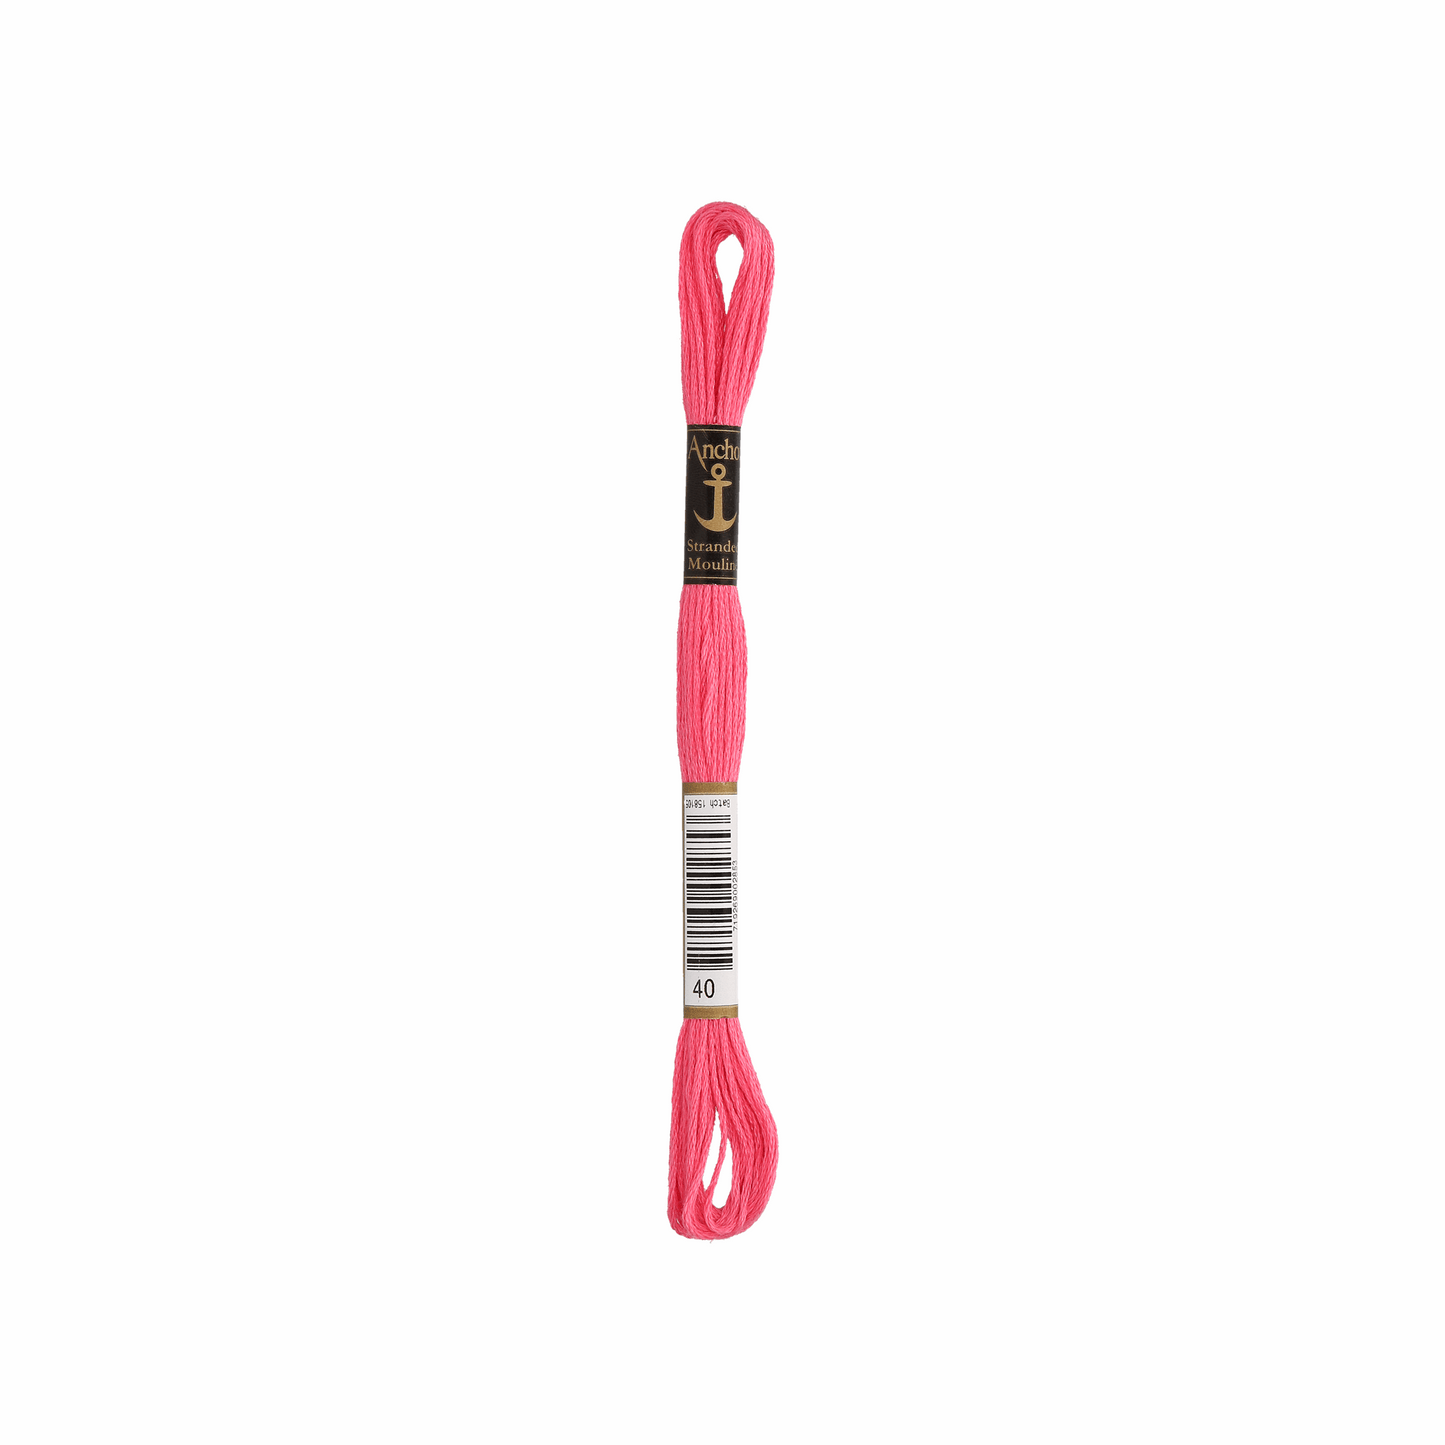 Anchor Sticktwist, 2g, Farbe 40 pink hell